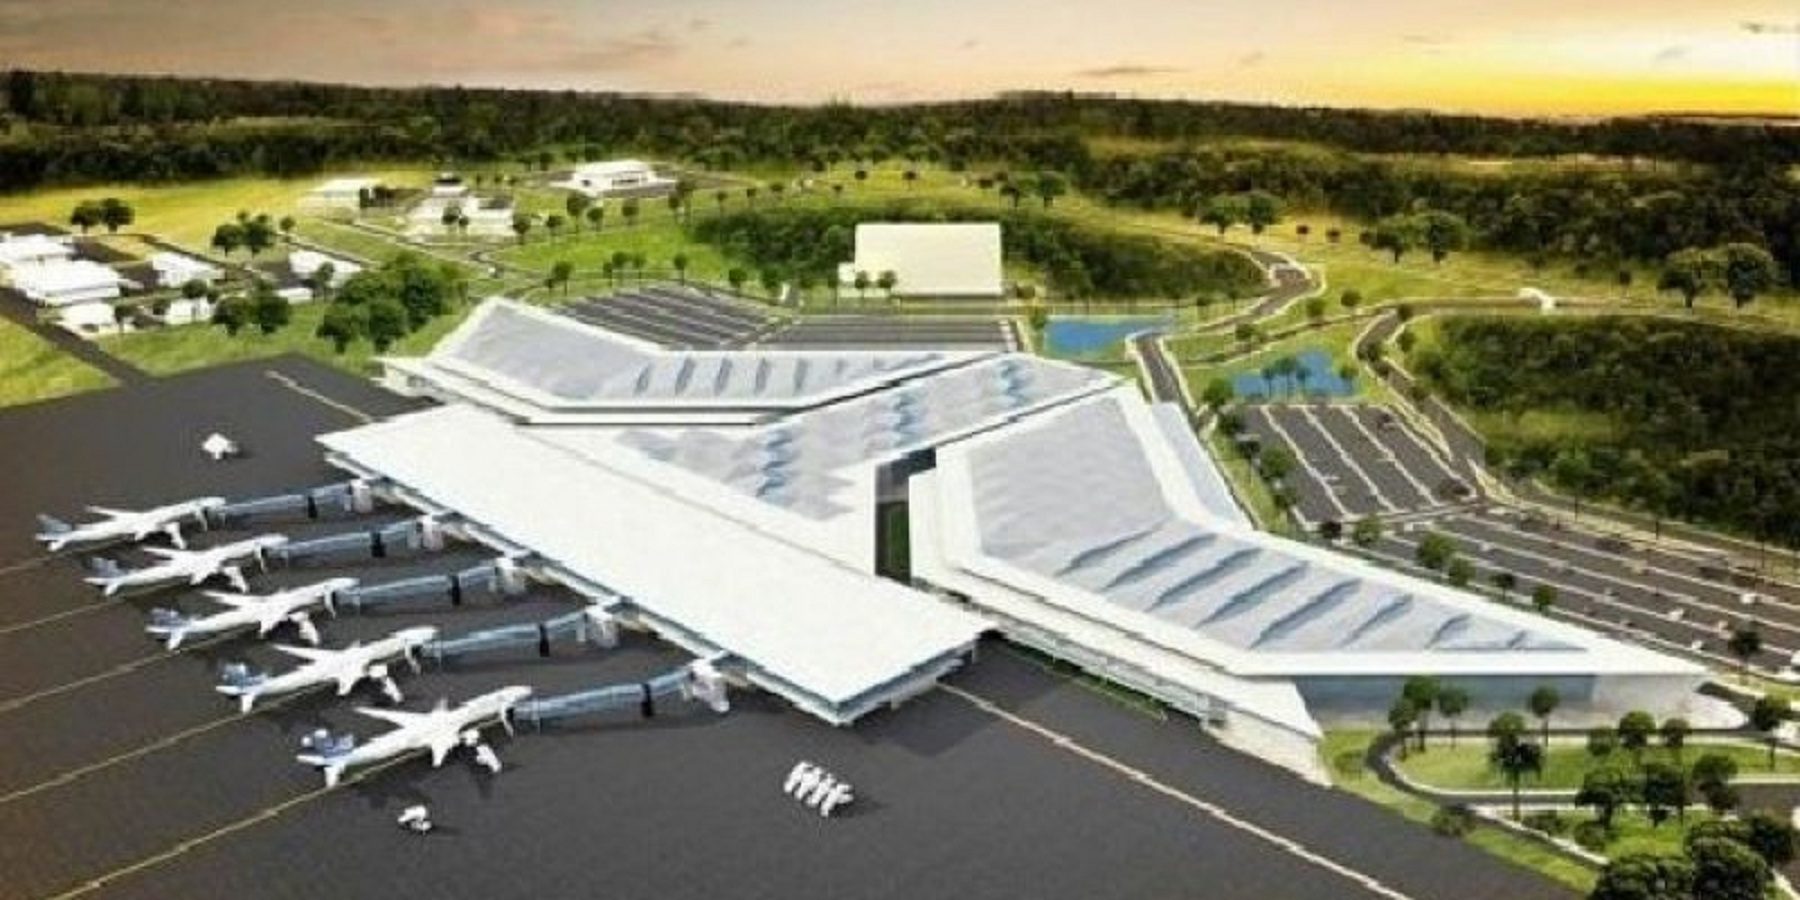 pembangunan Bandar Udara (Bandara) Sukabumi, tepatnya di wilayah Kecamatan Cikembar, Kabupaten Sukabumi dinilai tidak penting.